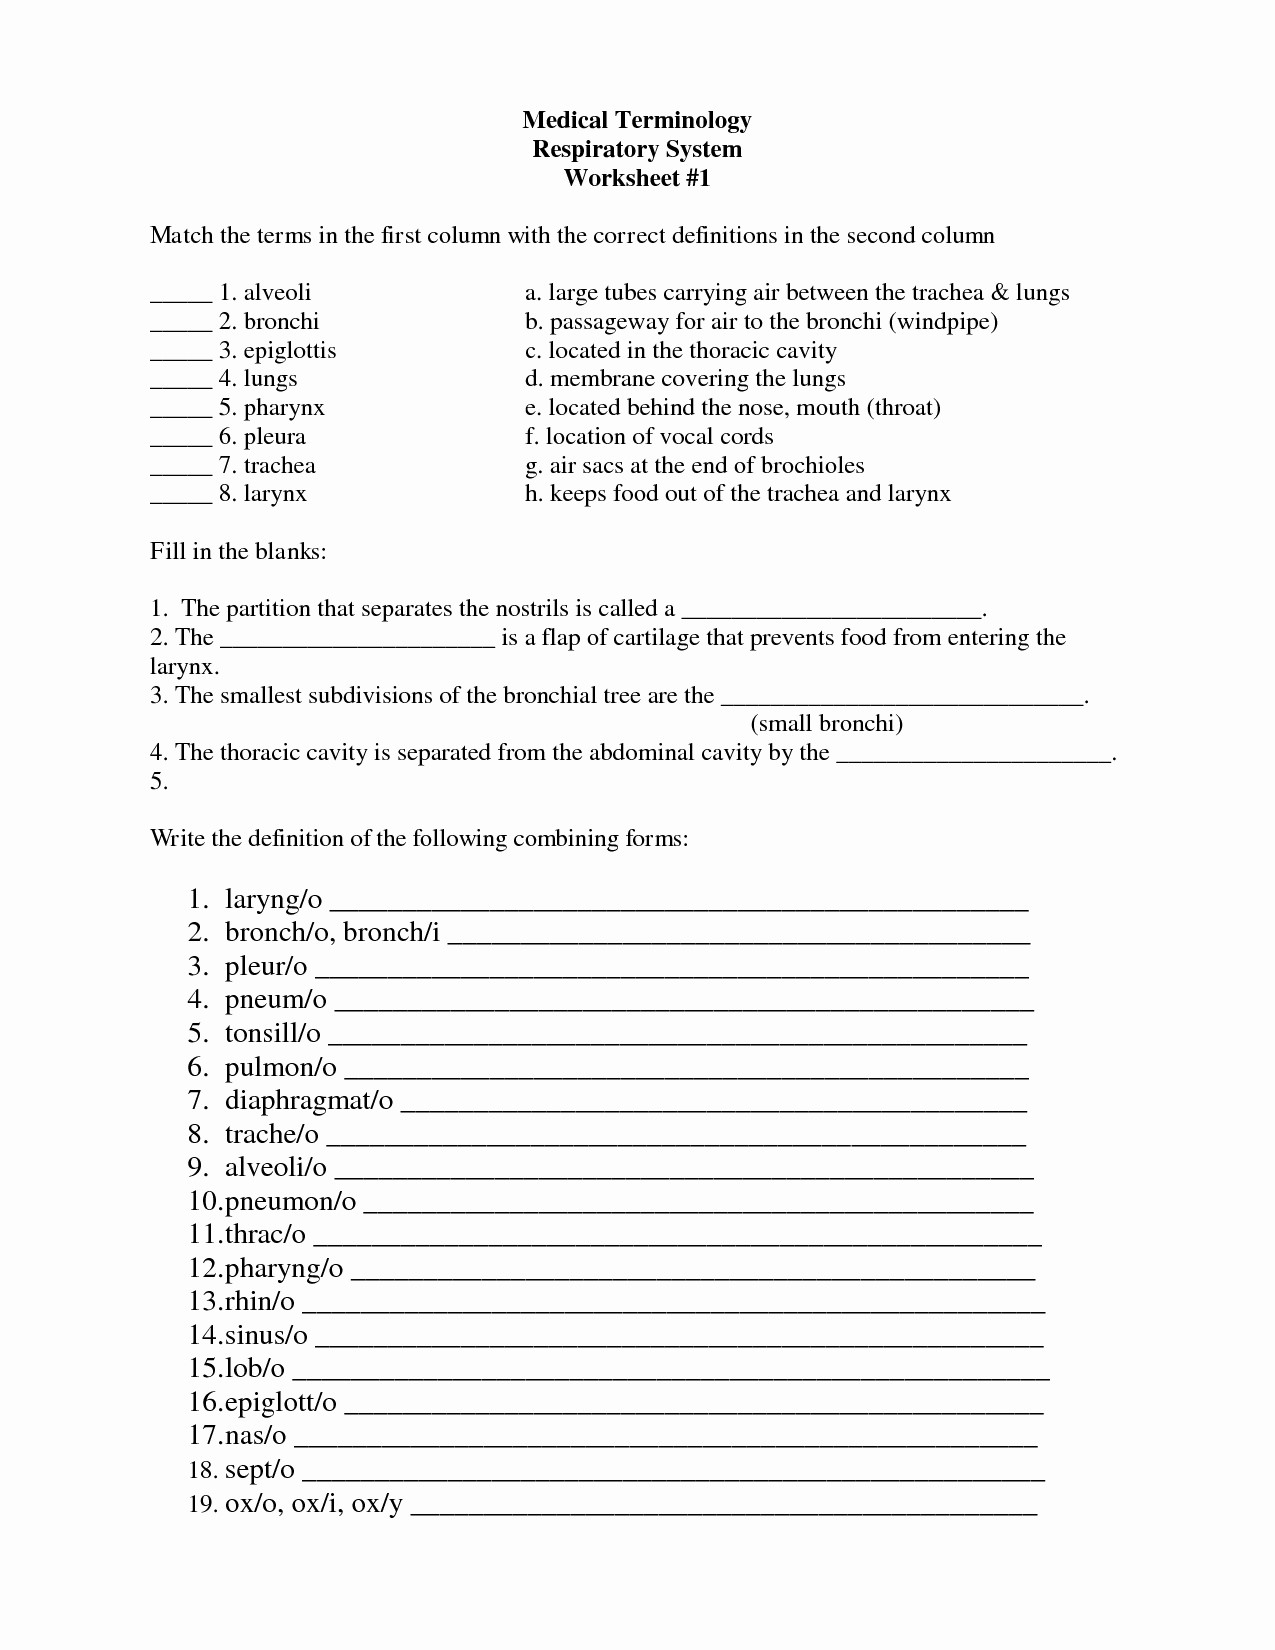 Medical Terminology Abbreviations Worksheet Medical Terminology Worksheet with Answers